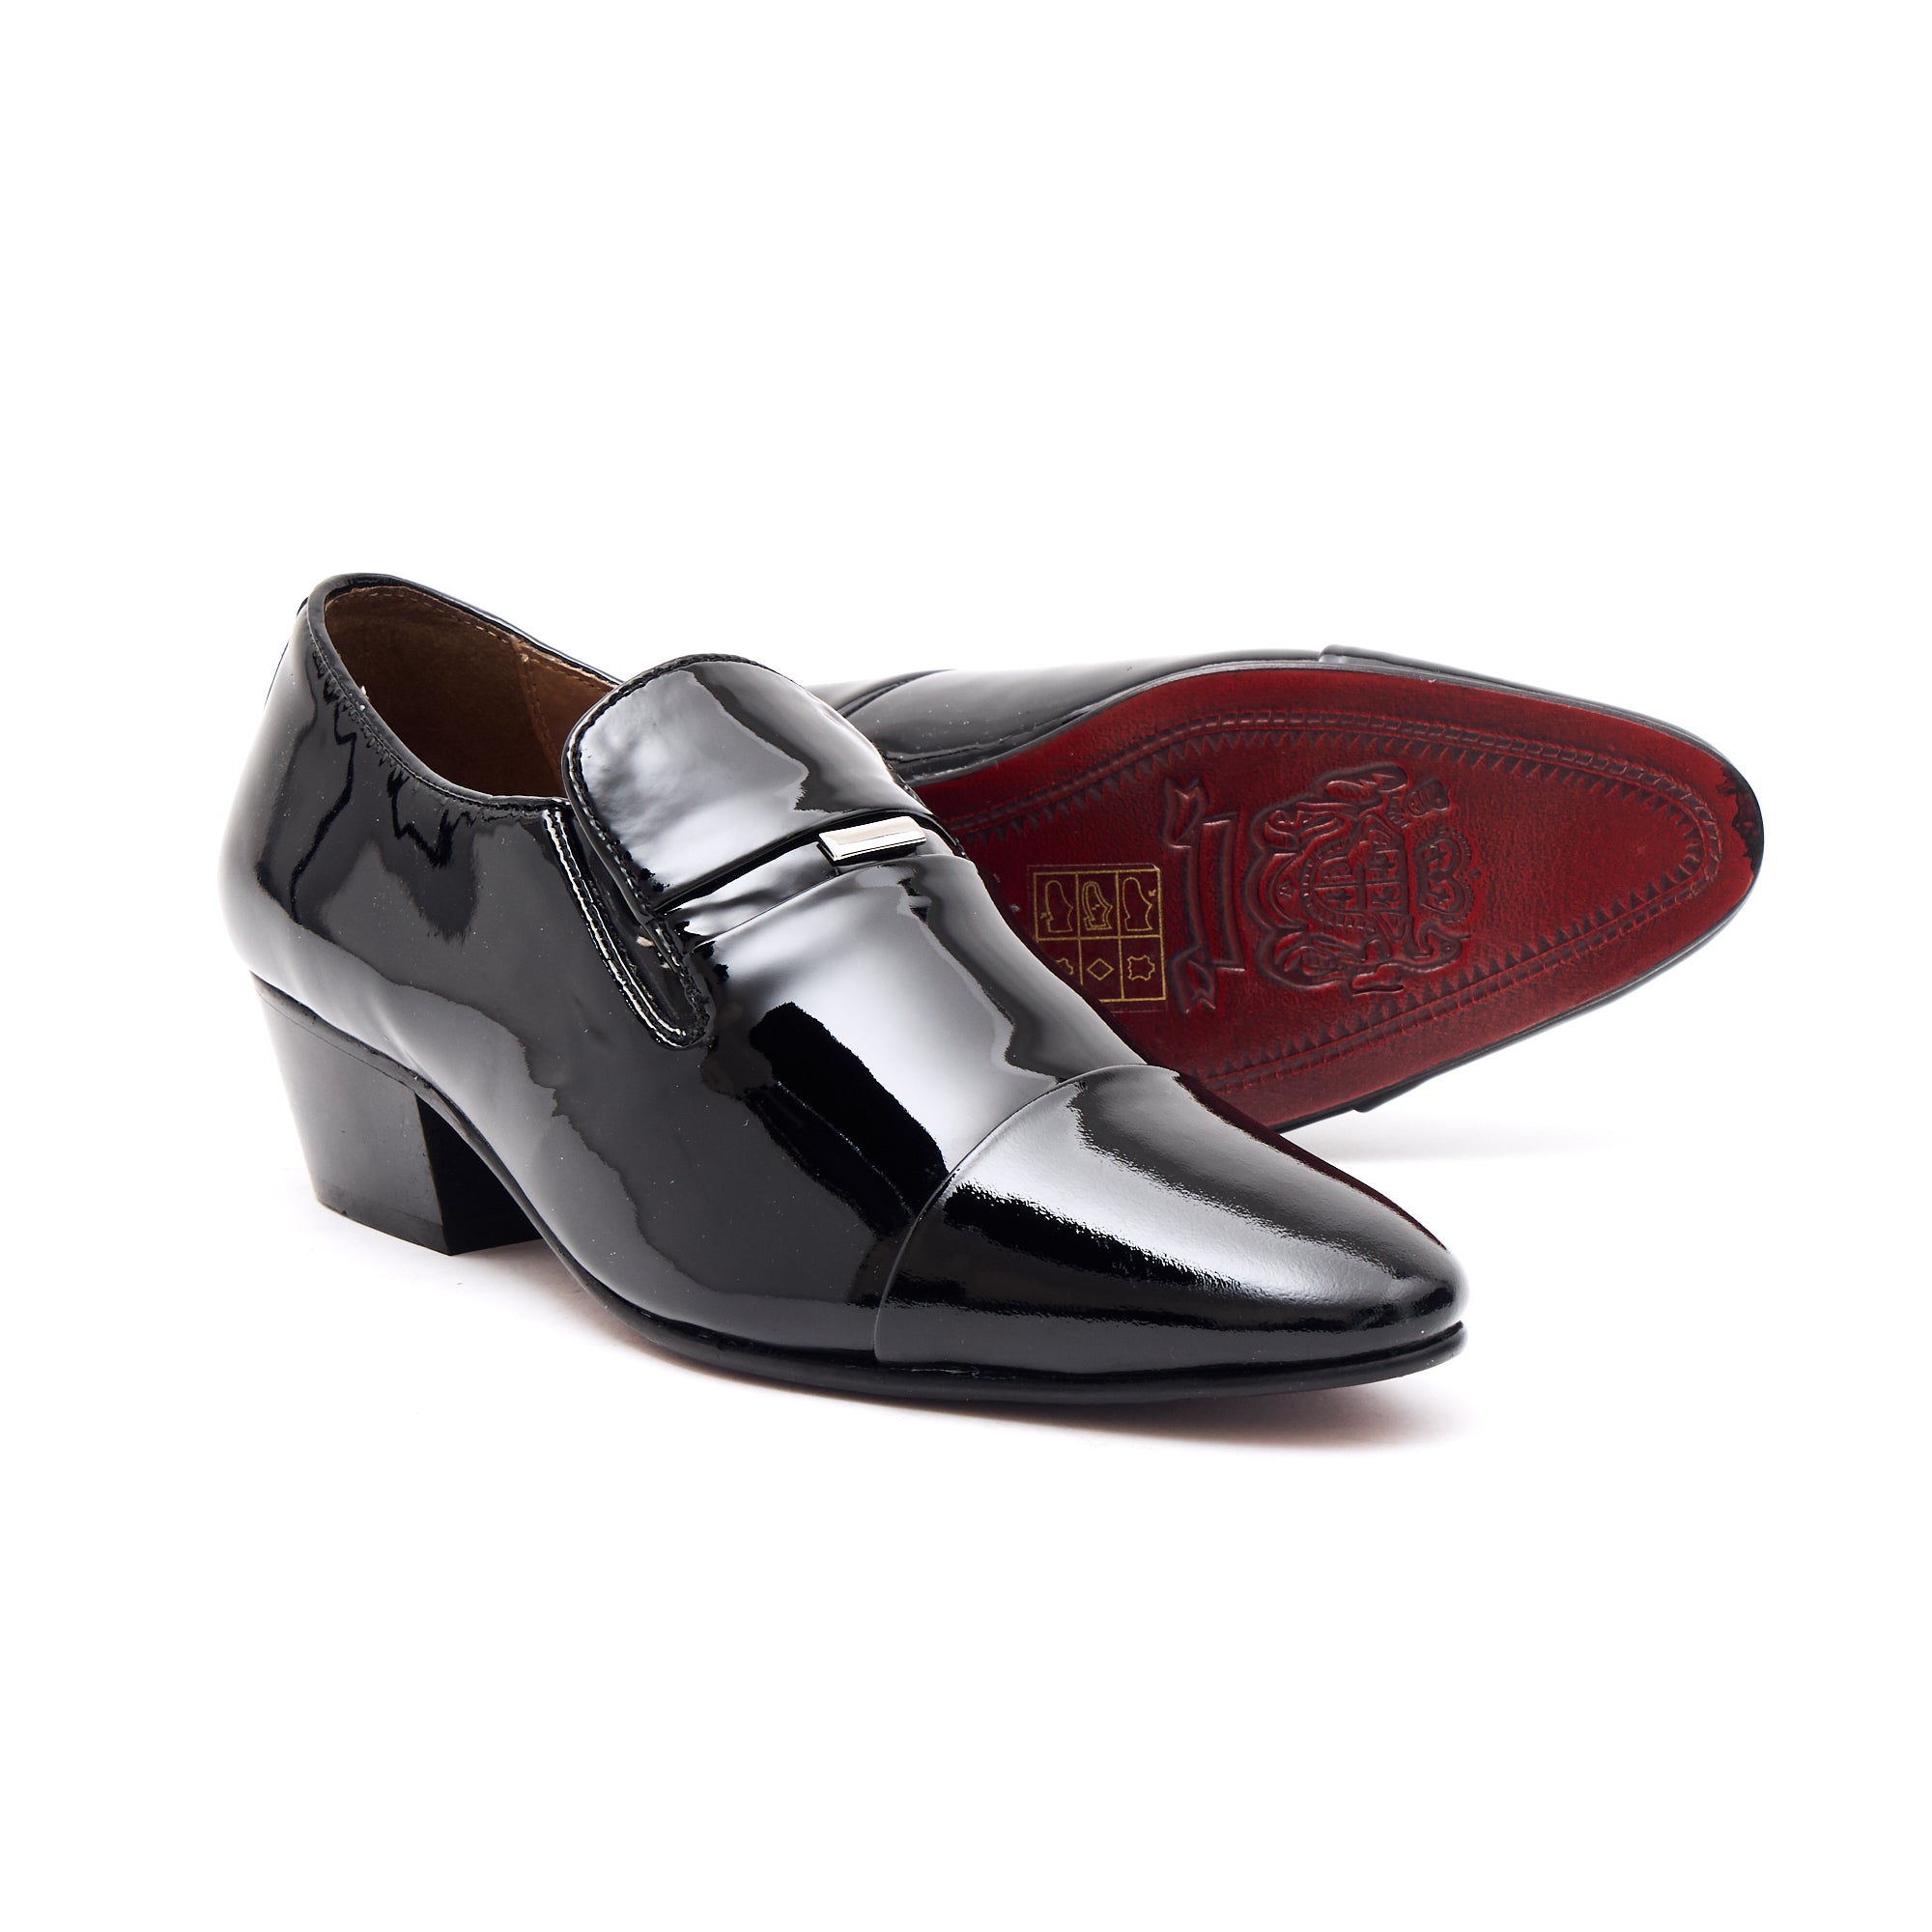 Mens Leather Cuban Heel Patent Shoes - 33478 Black